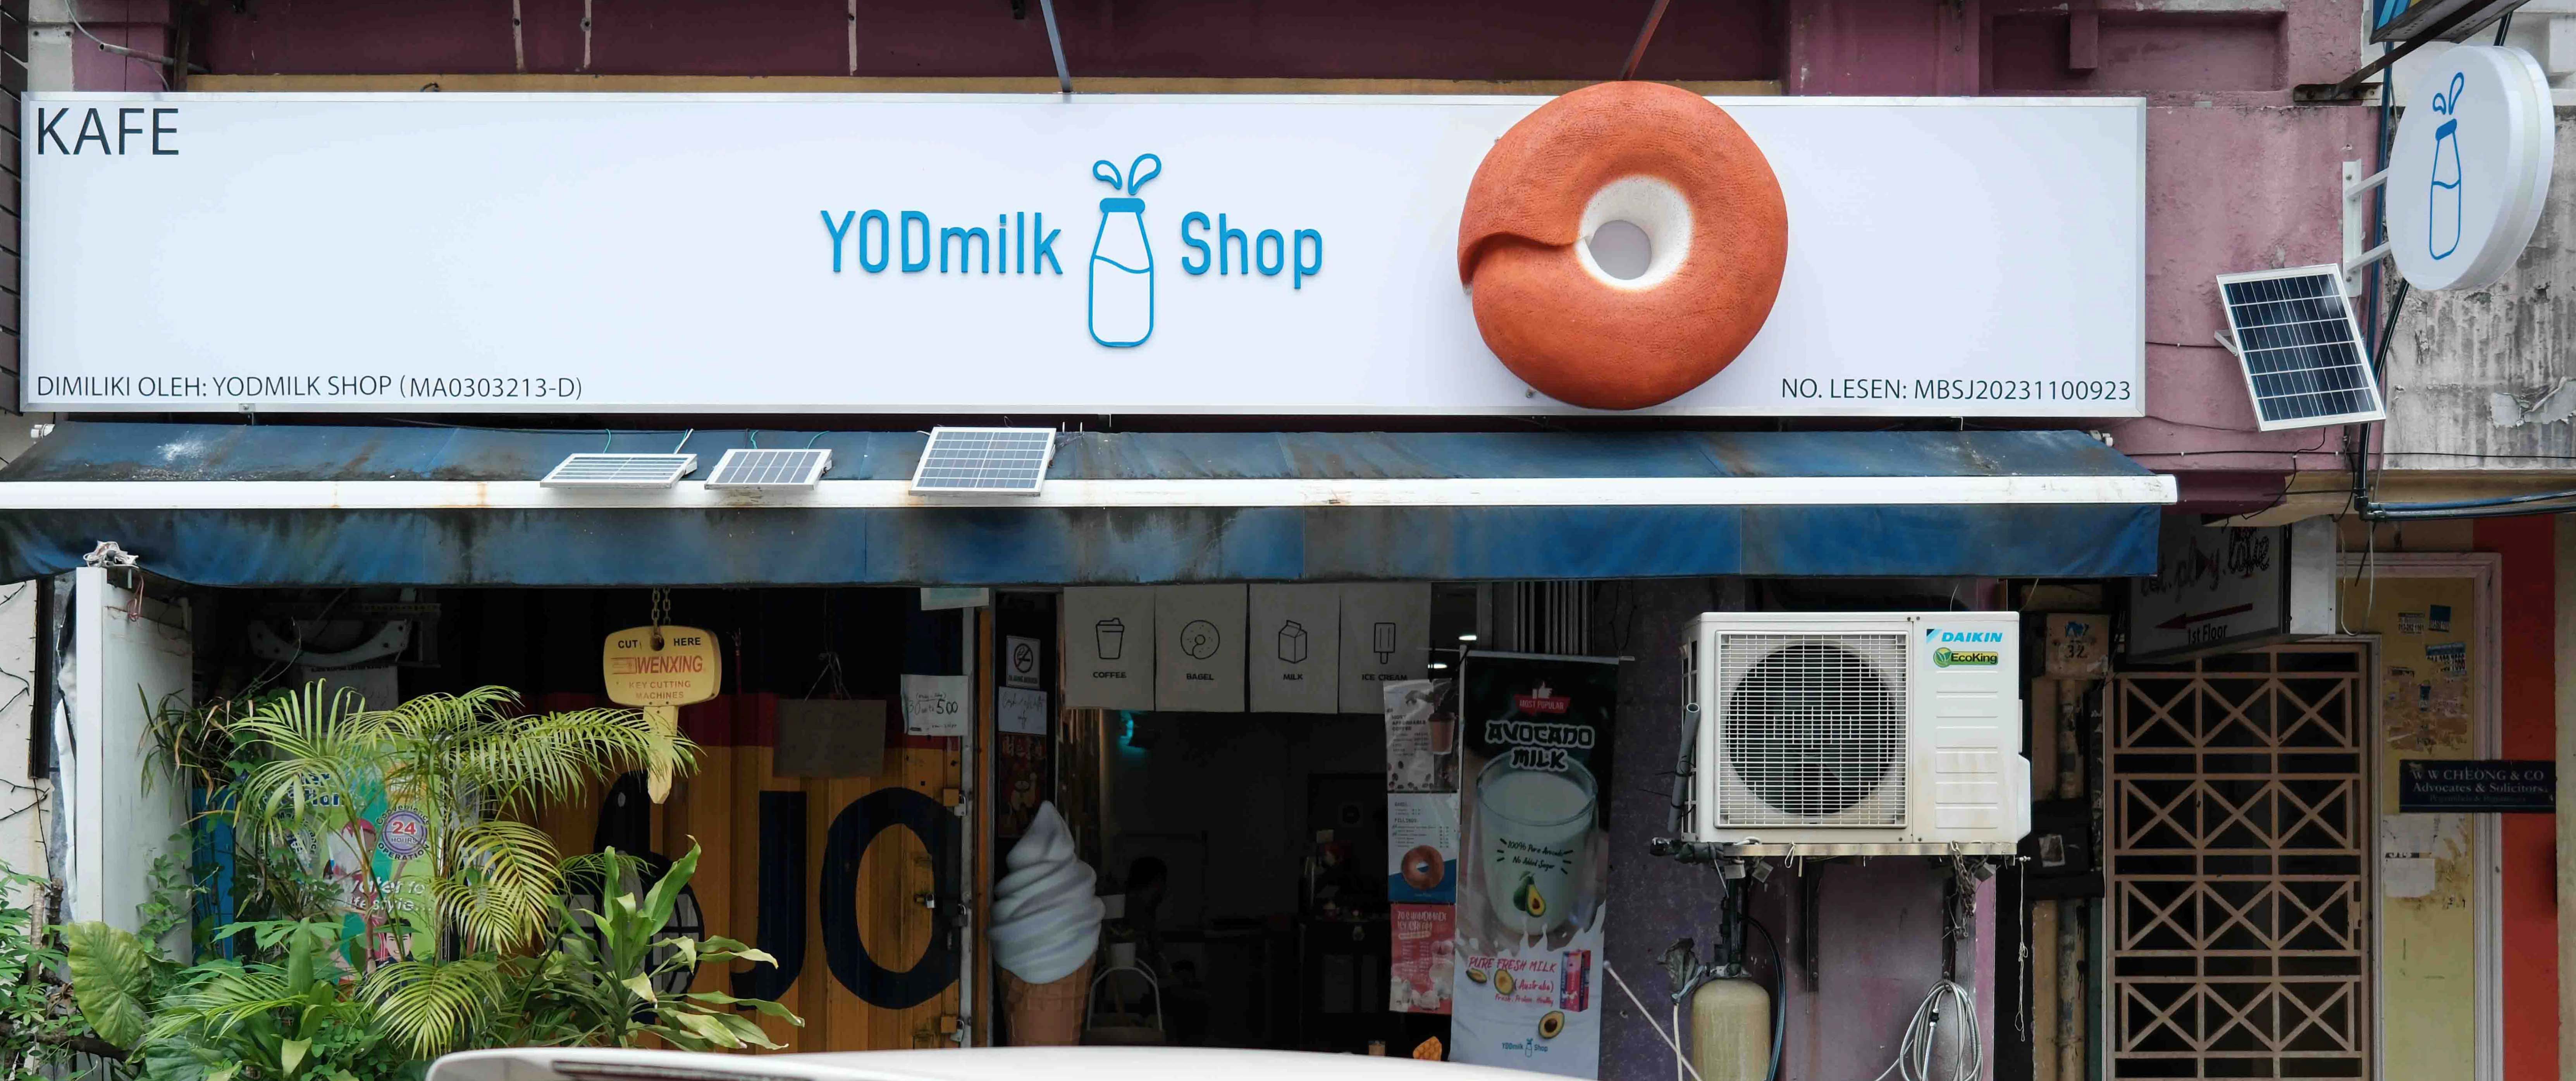 yodmilk shop, subang jaya